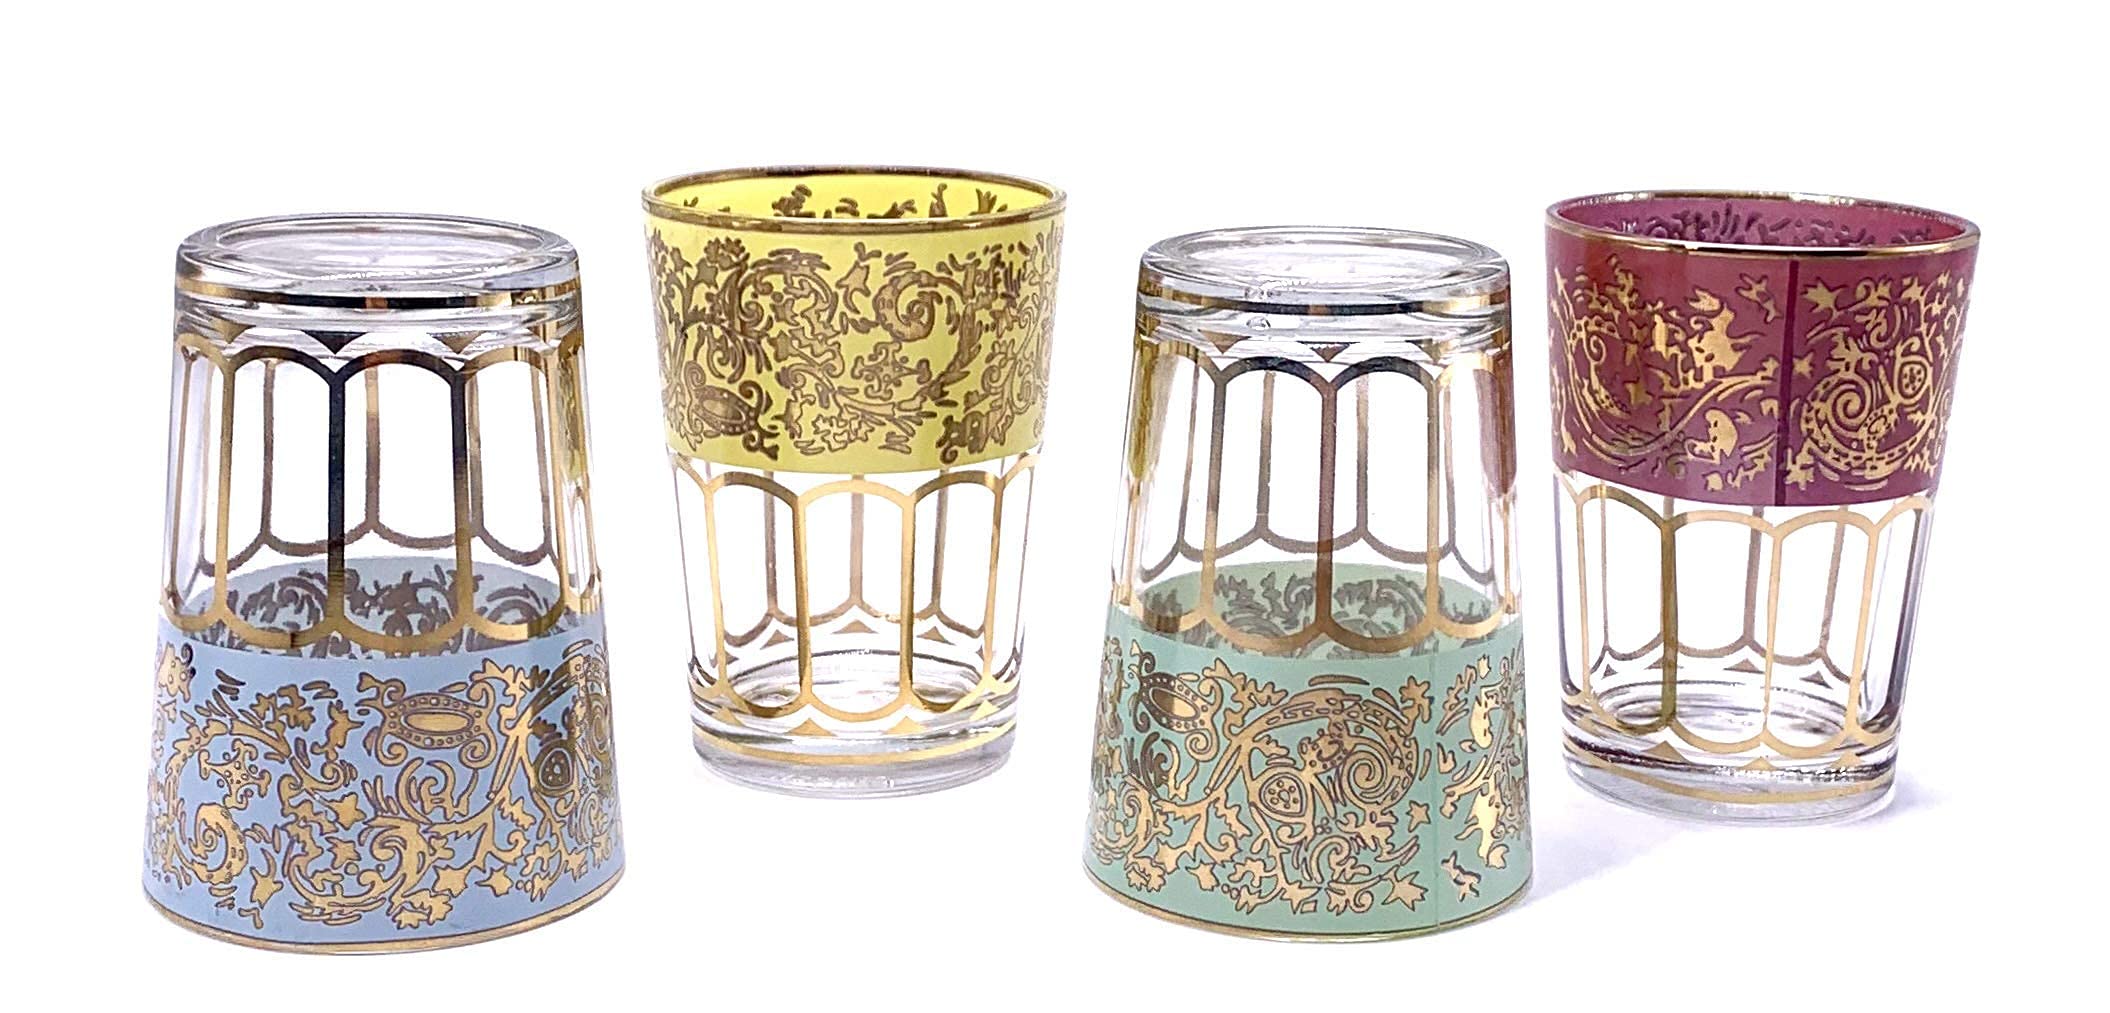 Big Gold Shot Glasses, Mini Juice Glasses, 4 oz Shot Glasses Set, Party Shot Glasses With Colorful Print, Small Stemless Wine Glass Set Of 4, 5oz Moroccan Tea Glasses